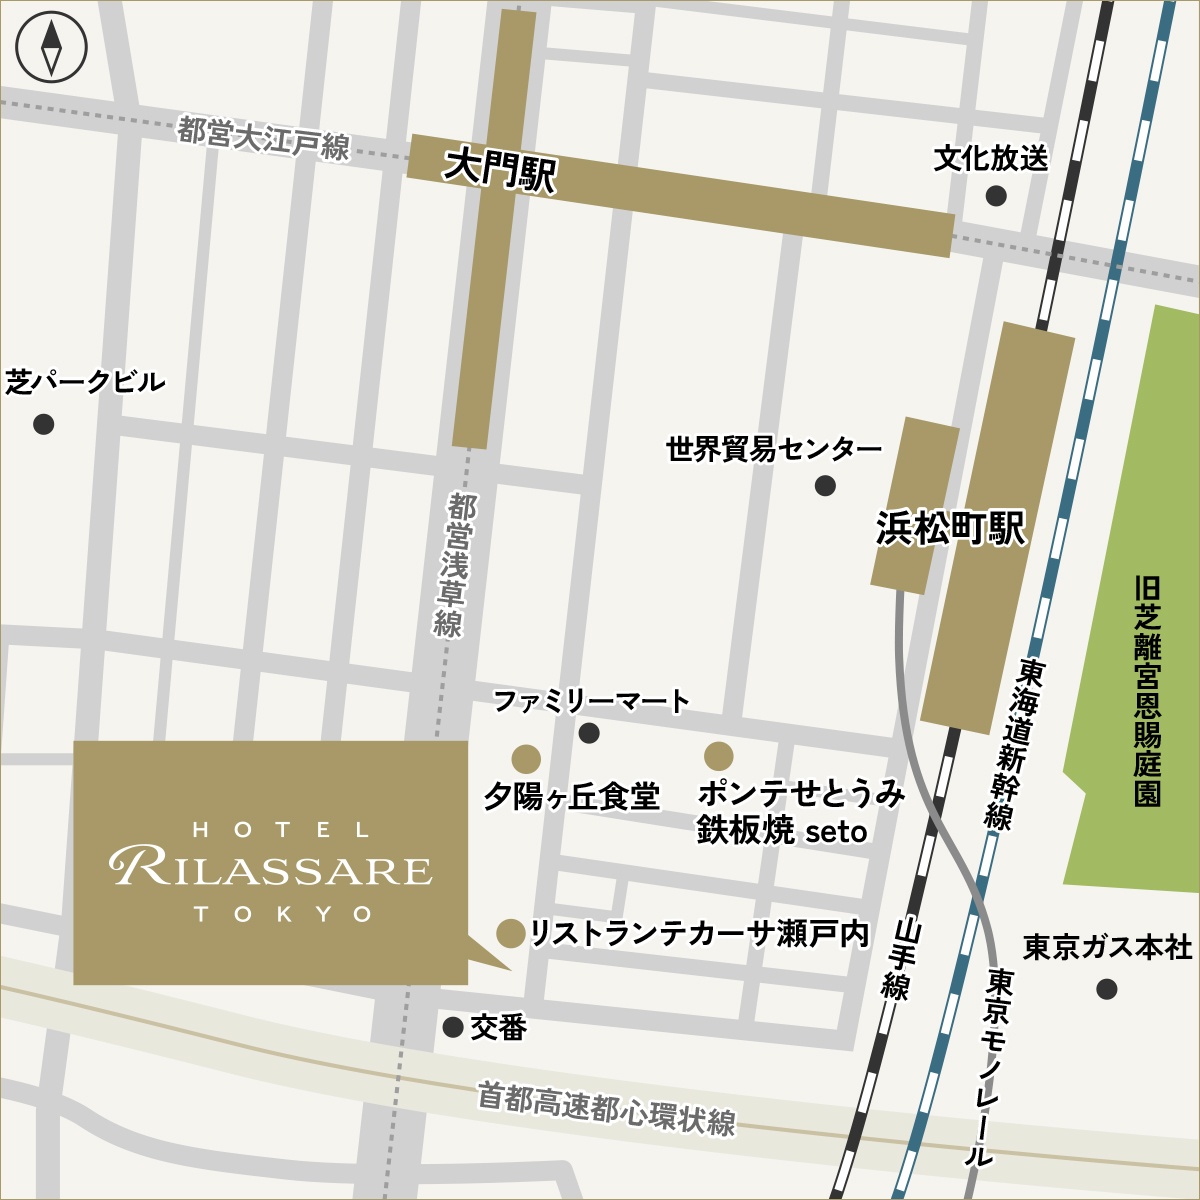 HOTEL RELASSARE TOKYO ホテルリラサーレ東京